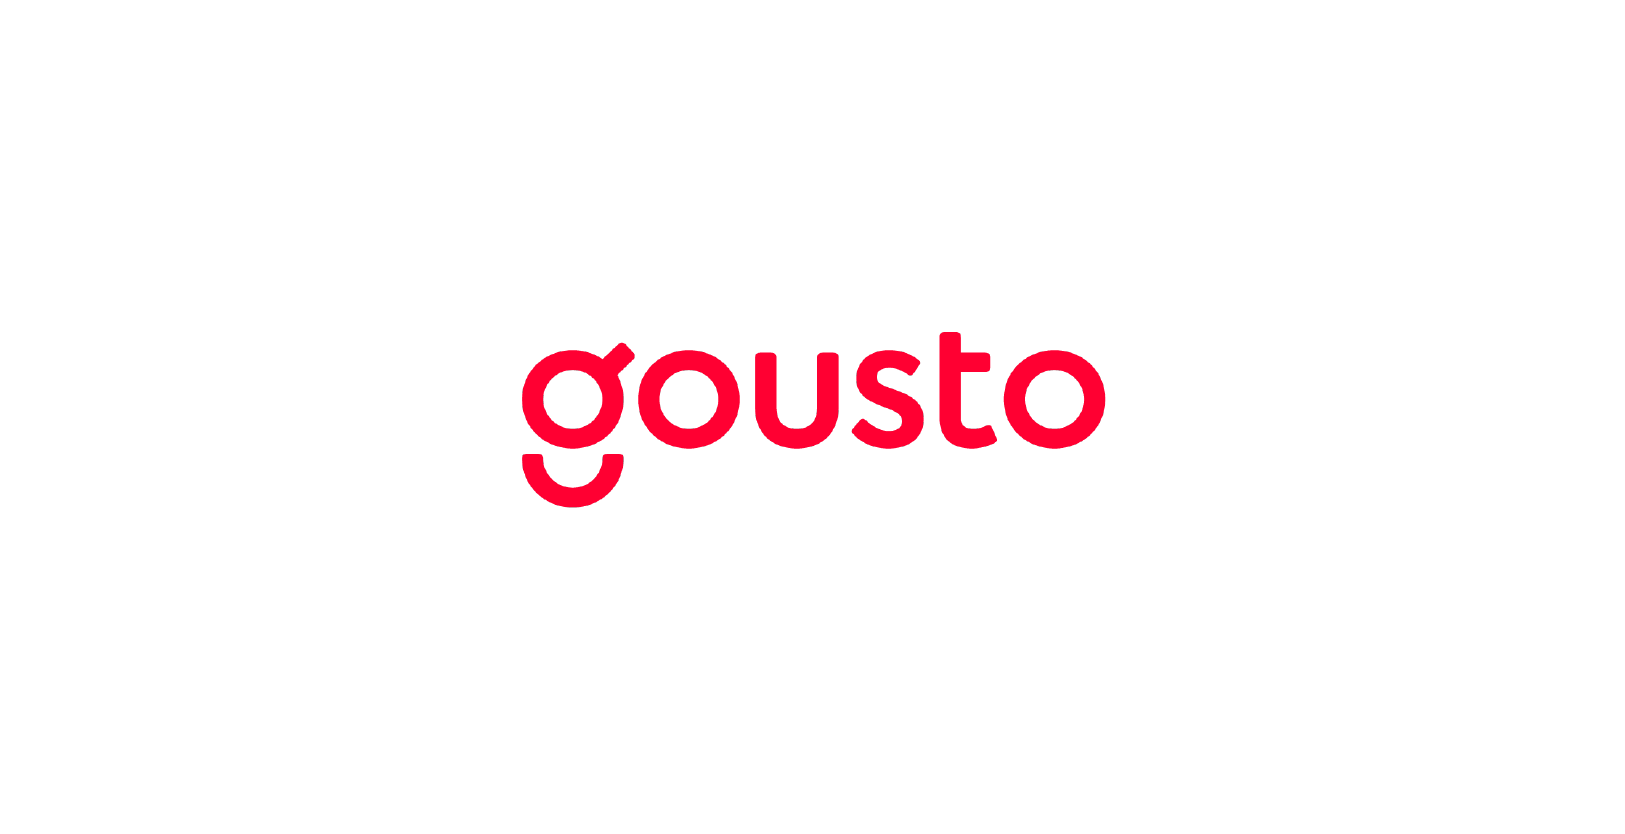 Vision Fund investment portfolio company Gousto's logo